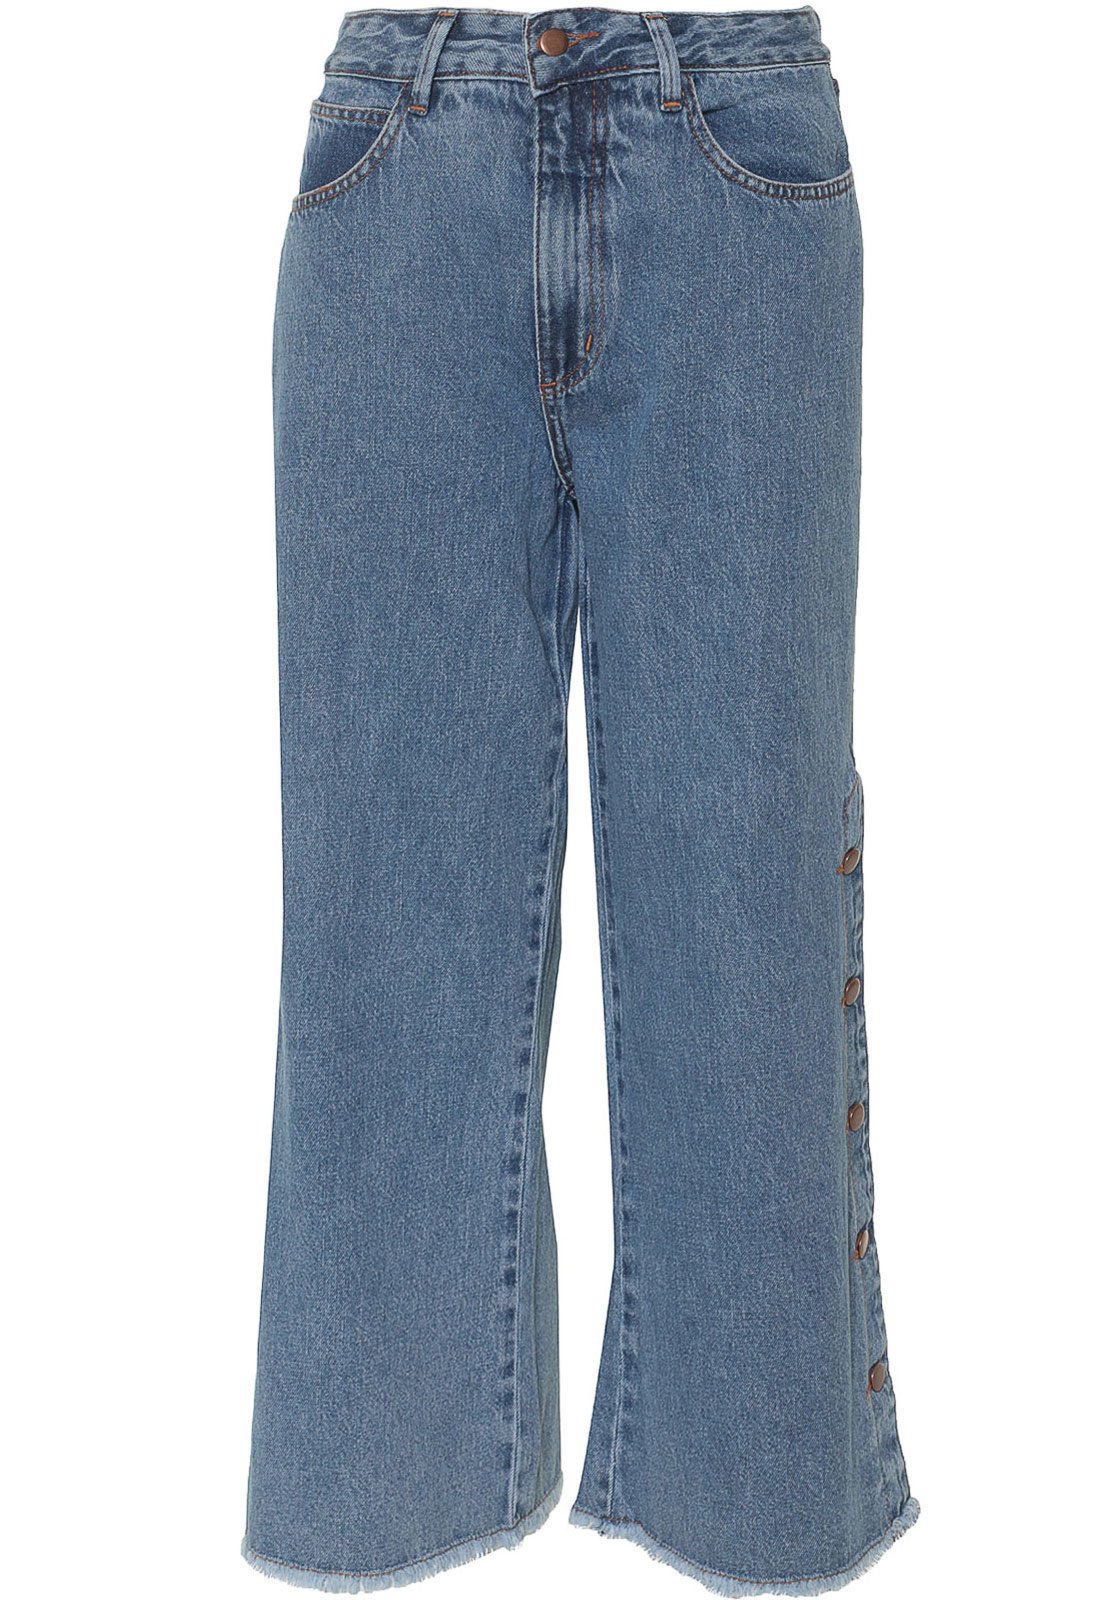 jeans mercatto